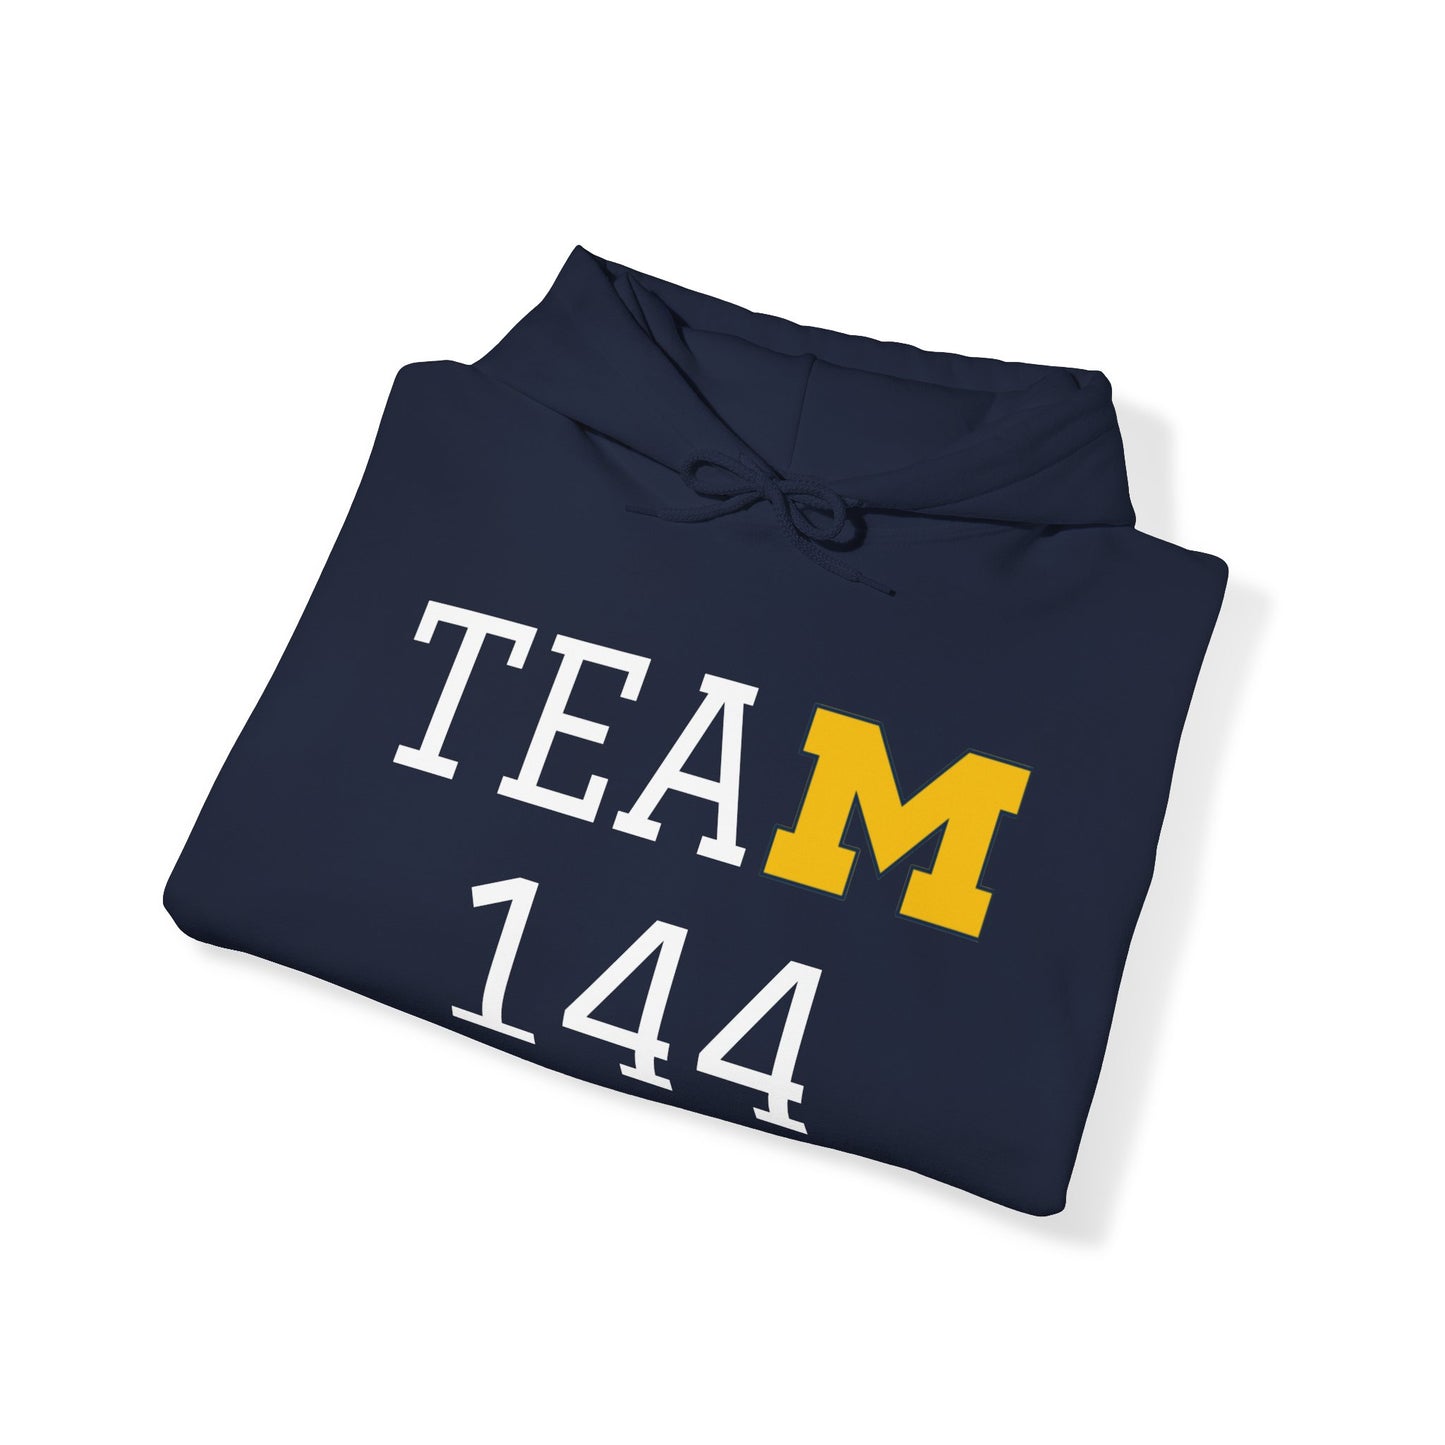 Michigan Team 144 - Cozy Comfort Unisex Heavy Blend Hooded Sweatshirt: Warmth Meets Style